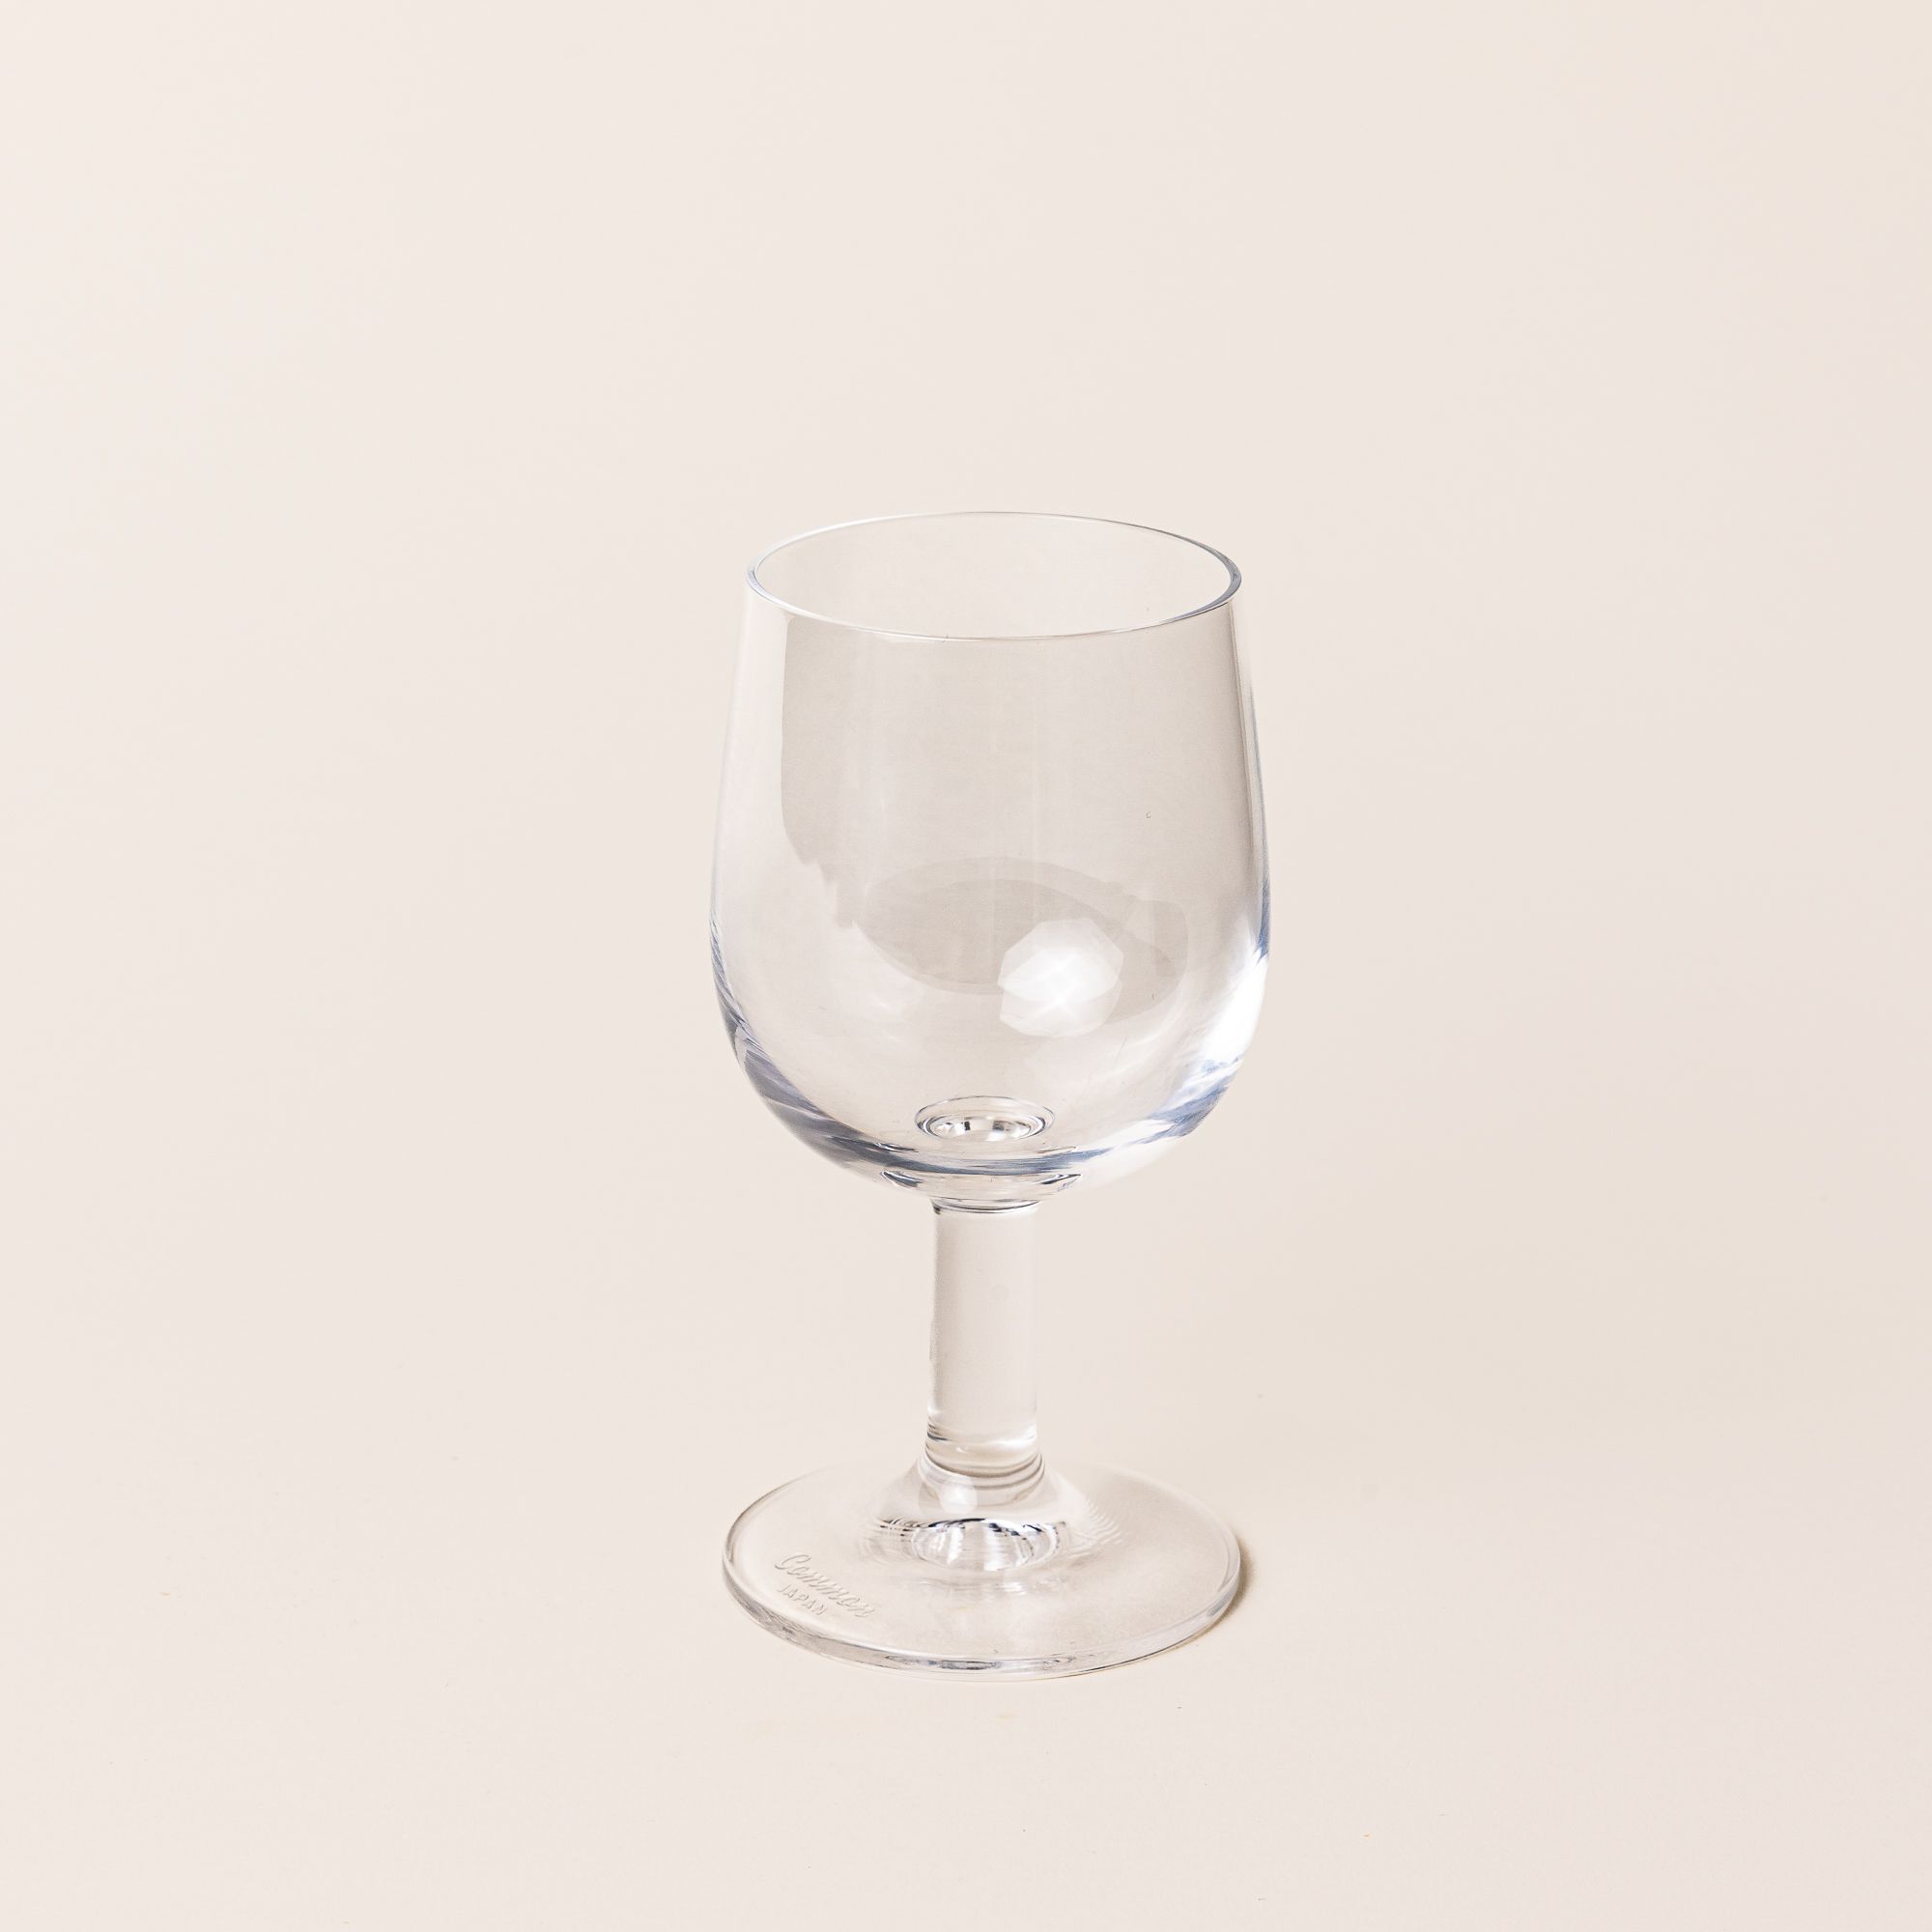 PEKJI Round Wine Glasses Clear Glass Short Stem